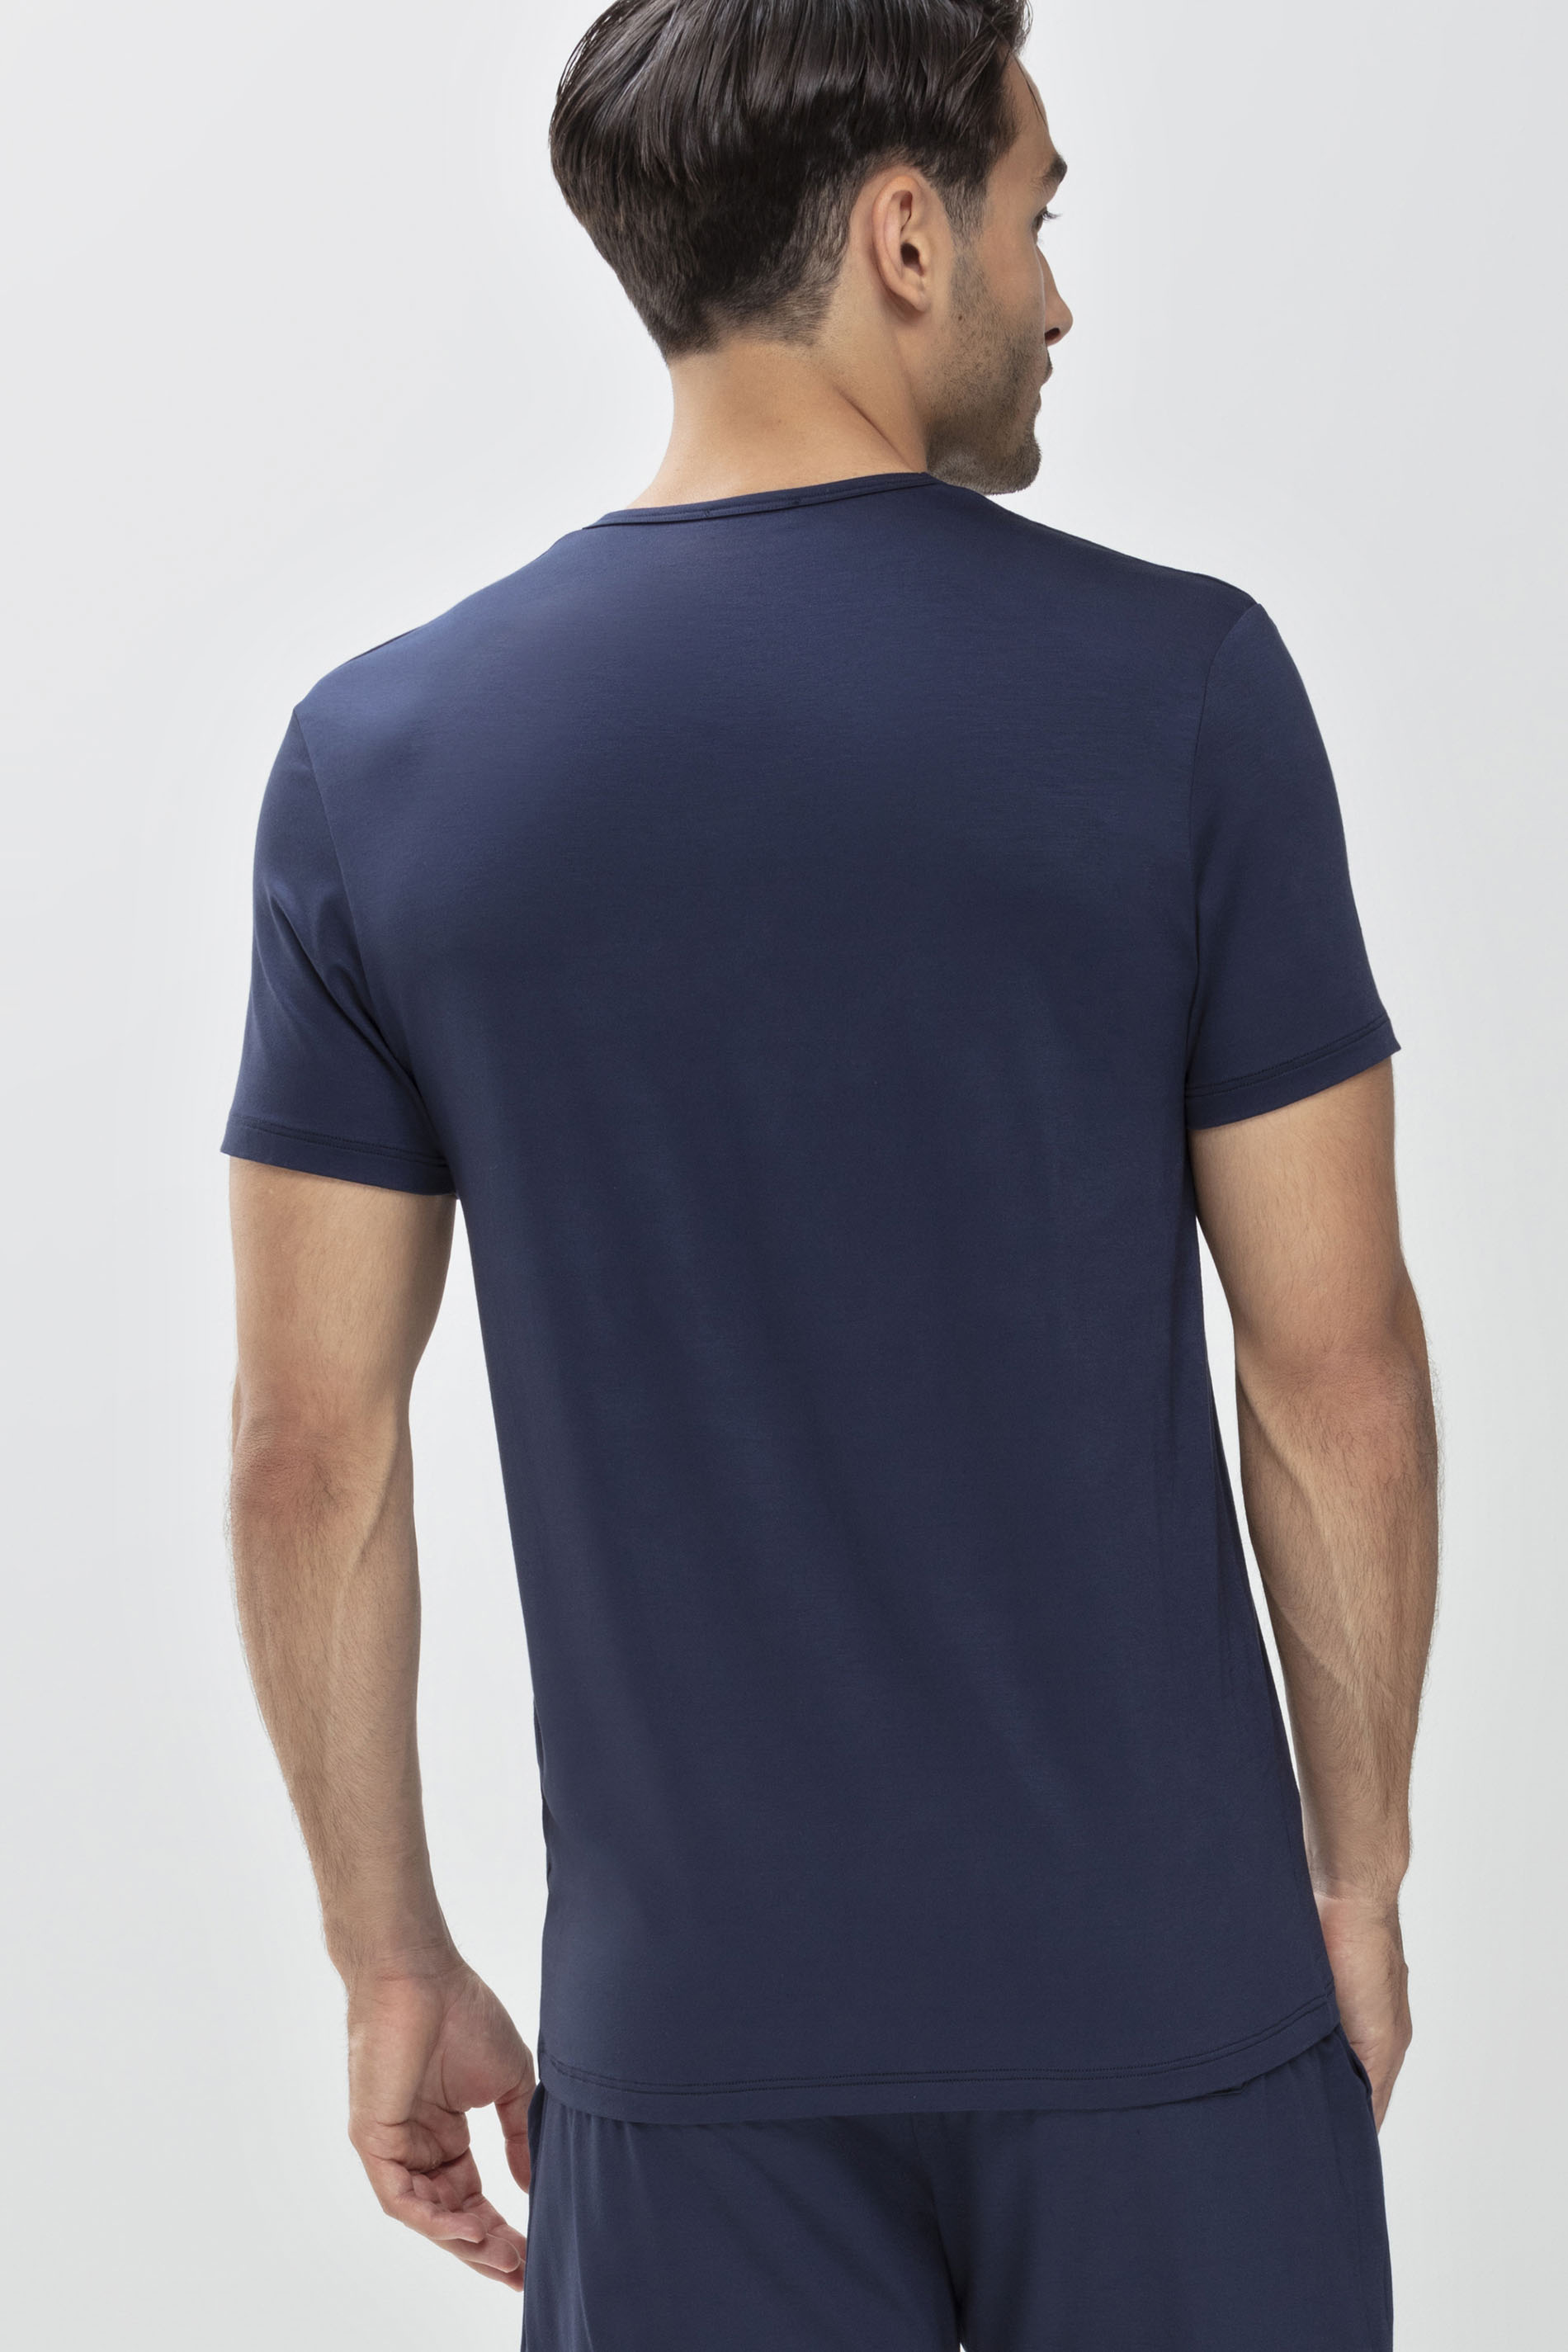 T-Shirt Yacht Blue Serie Jefferson Modal Rear View | mey®